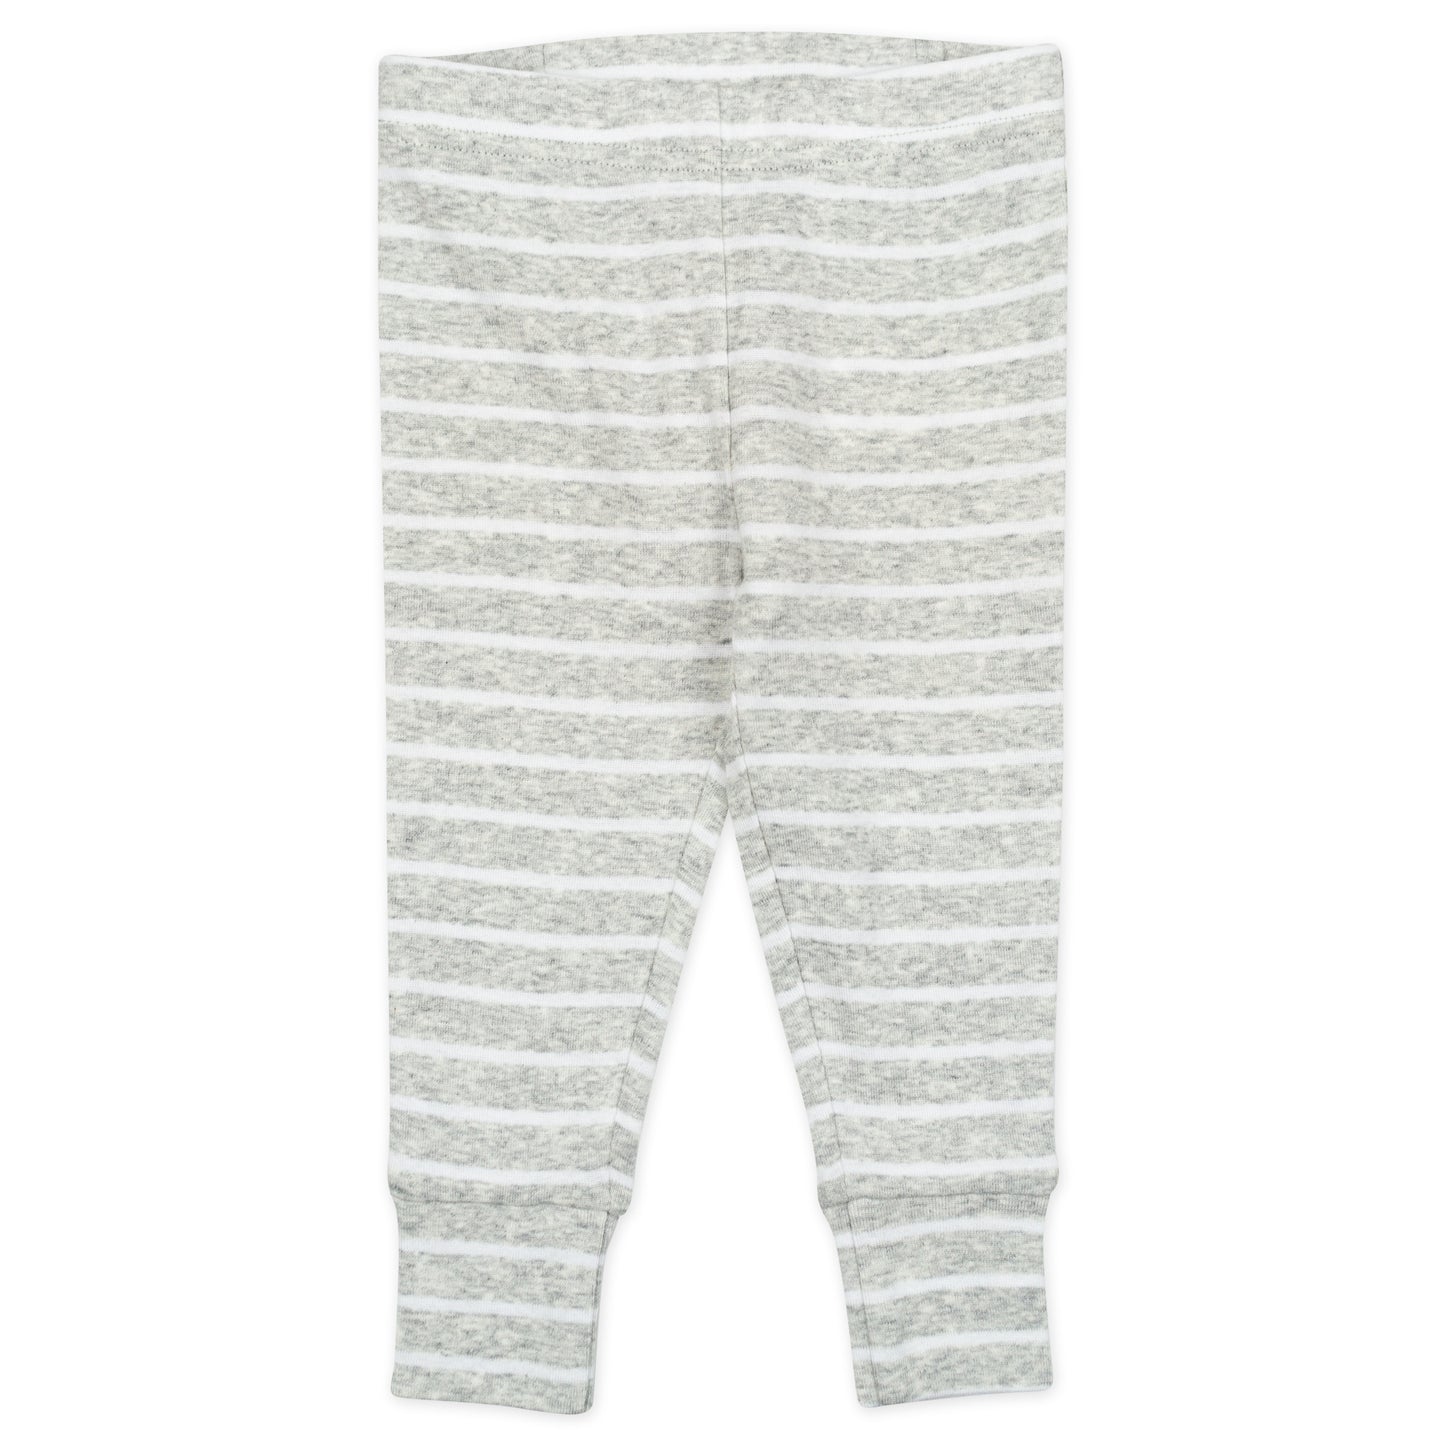 4-Piece Organic Cotton Pajama Set in Turtle Print